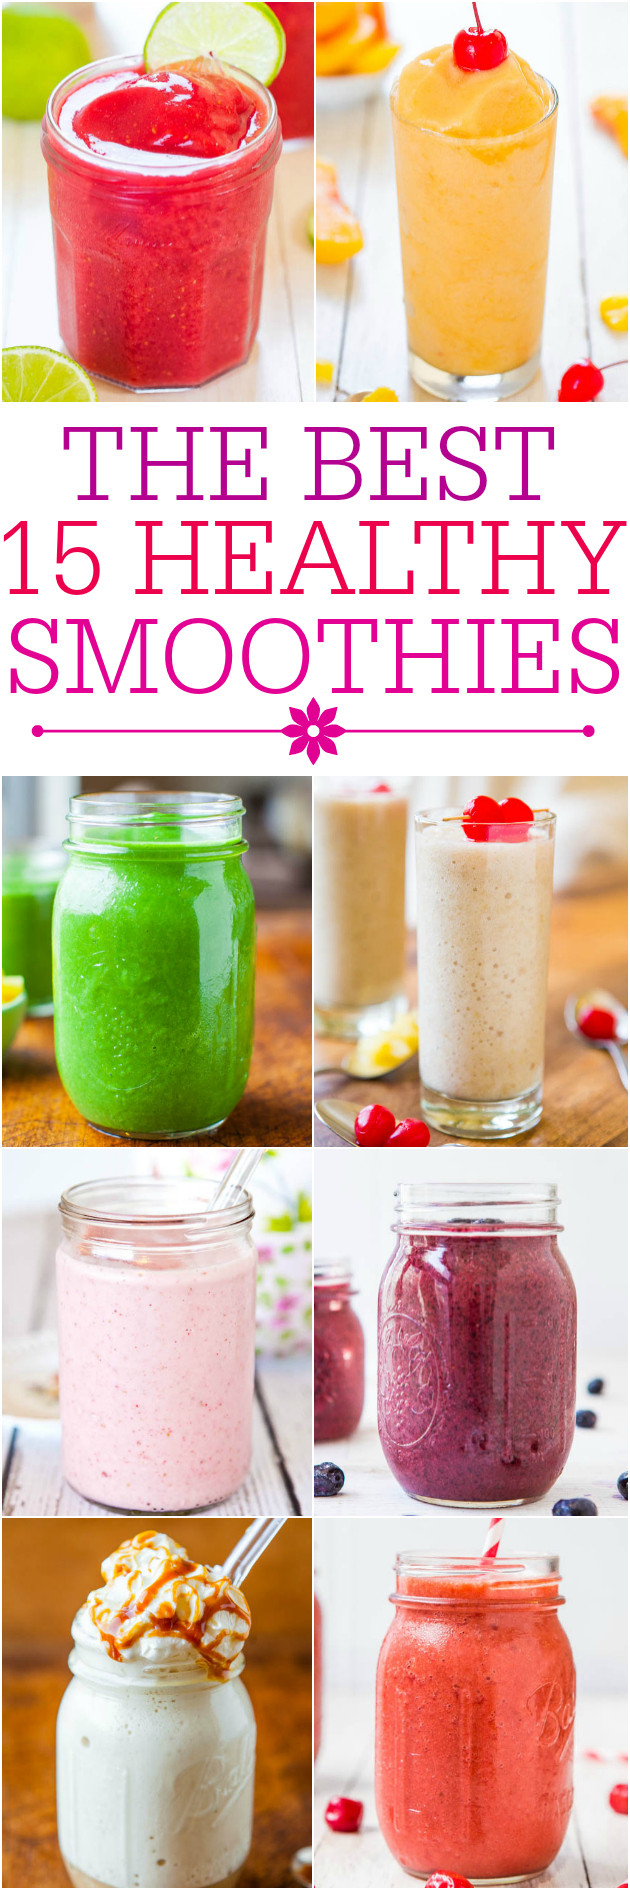 Fruit Smoothie Recipes With Yogurt
 Frozen Fruit Smoothie with Yogurt 3 Ingre nts